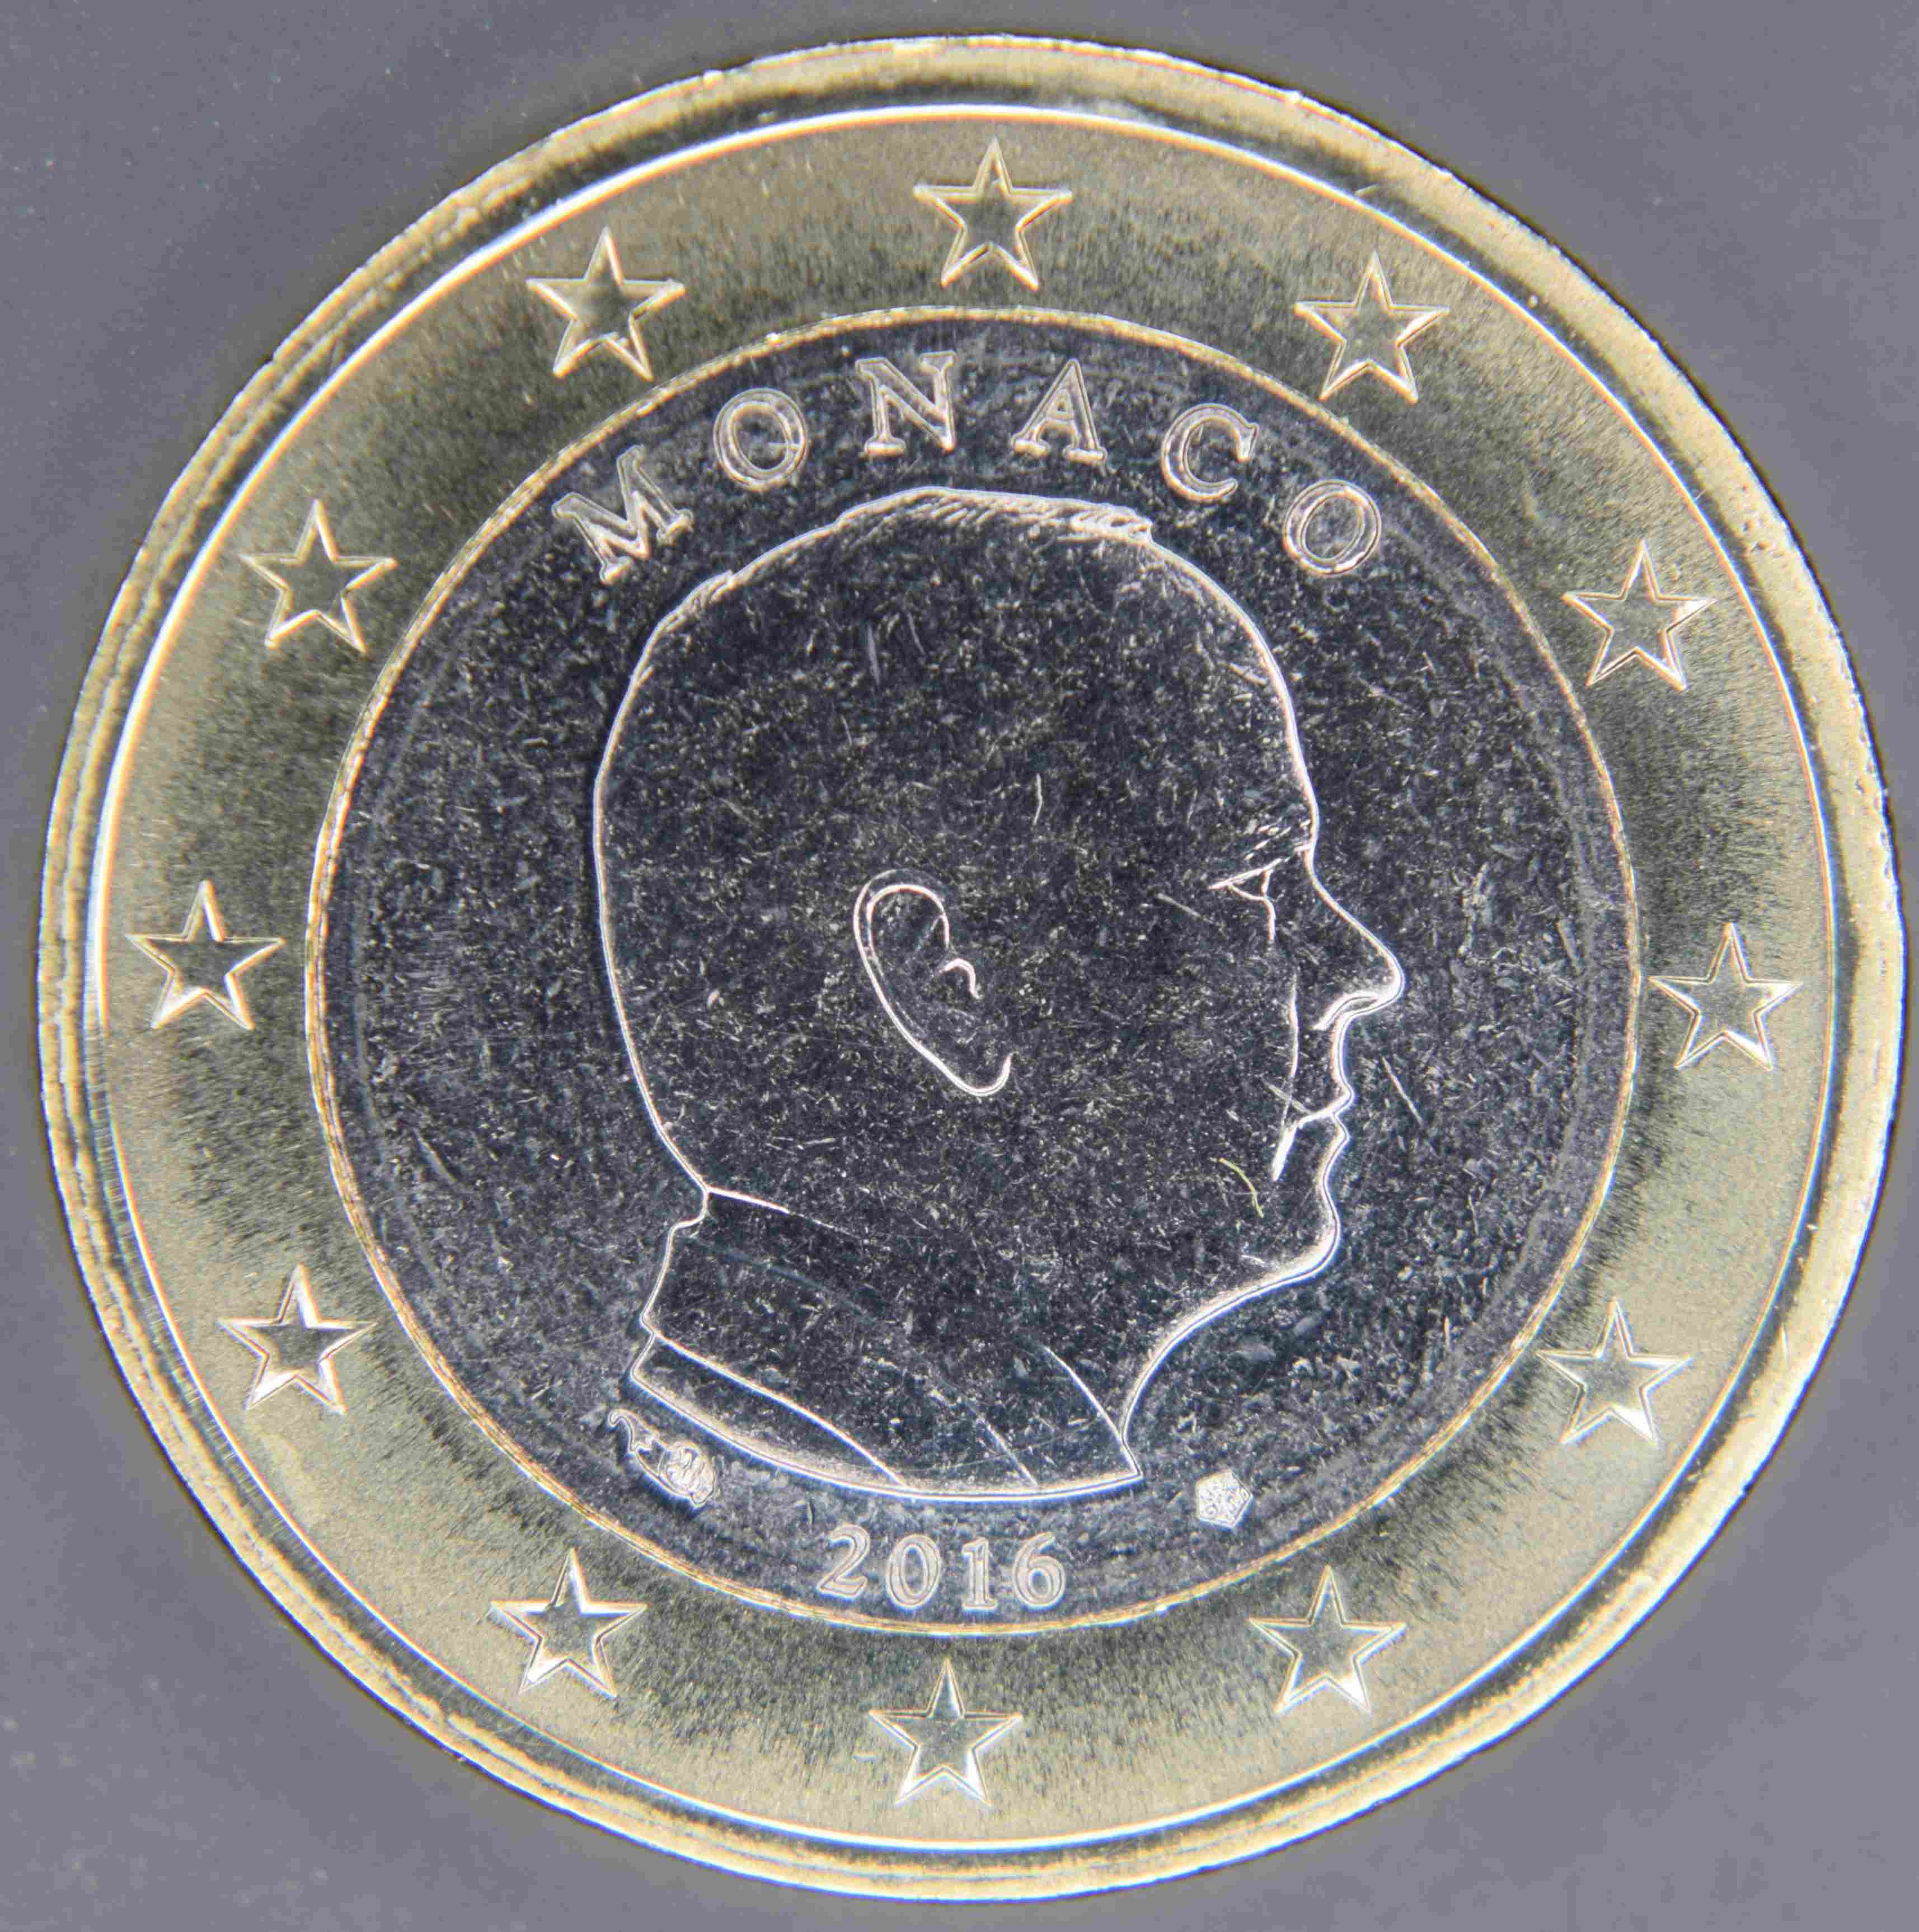 Monaco 1 Euro Münze 2016 - euro-muenzen.tv - Der Online Euromünzen Katalog